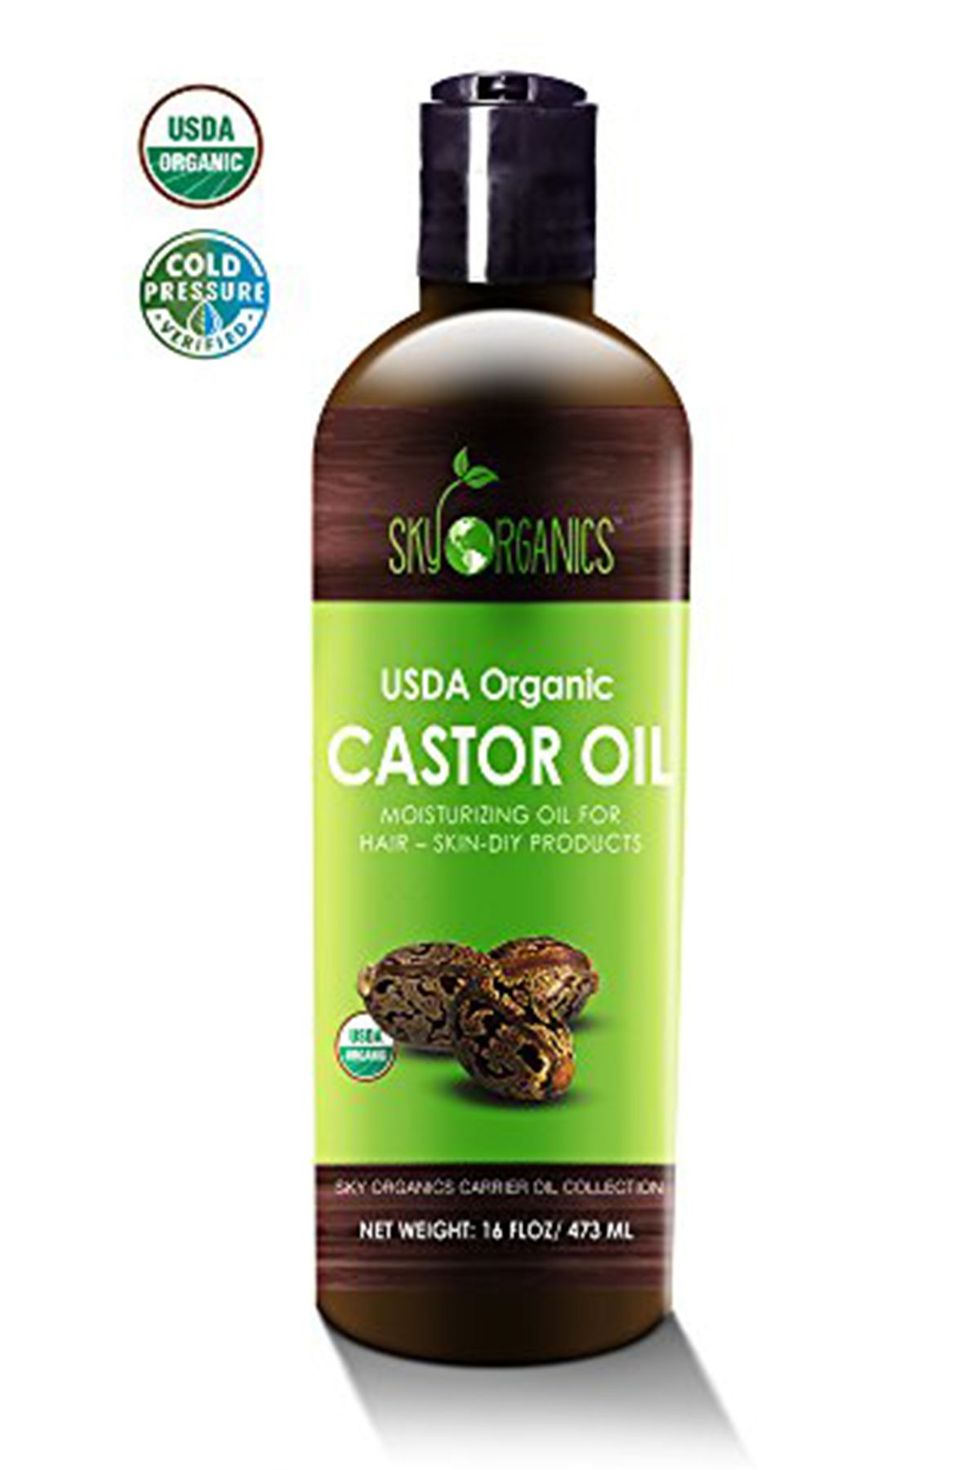 Sky Organics 100% Pure Organic Castor Oil, 16 fl oz Ingredients and Reviews